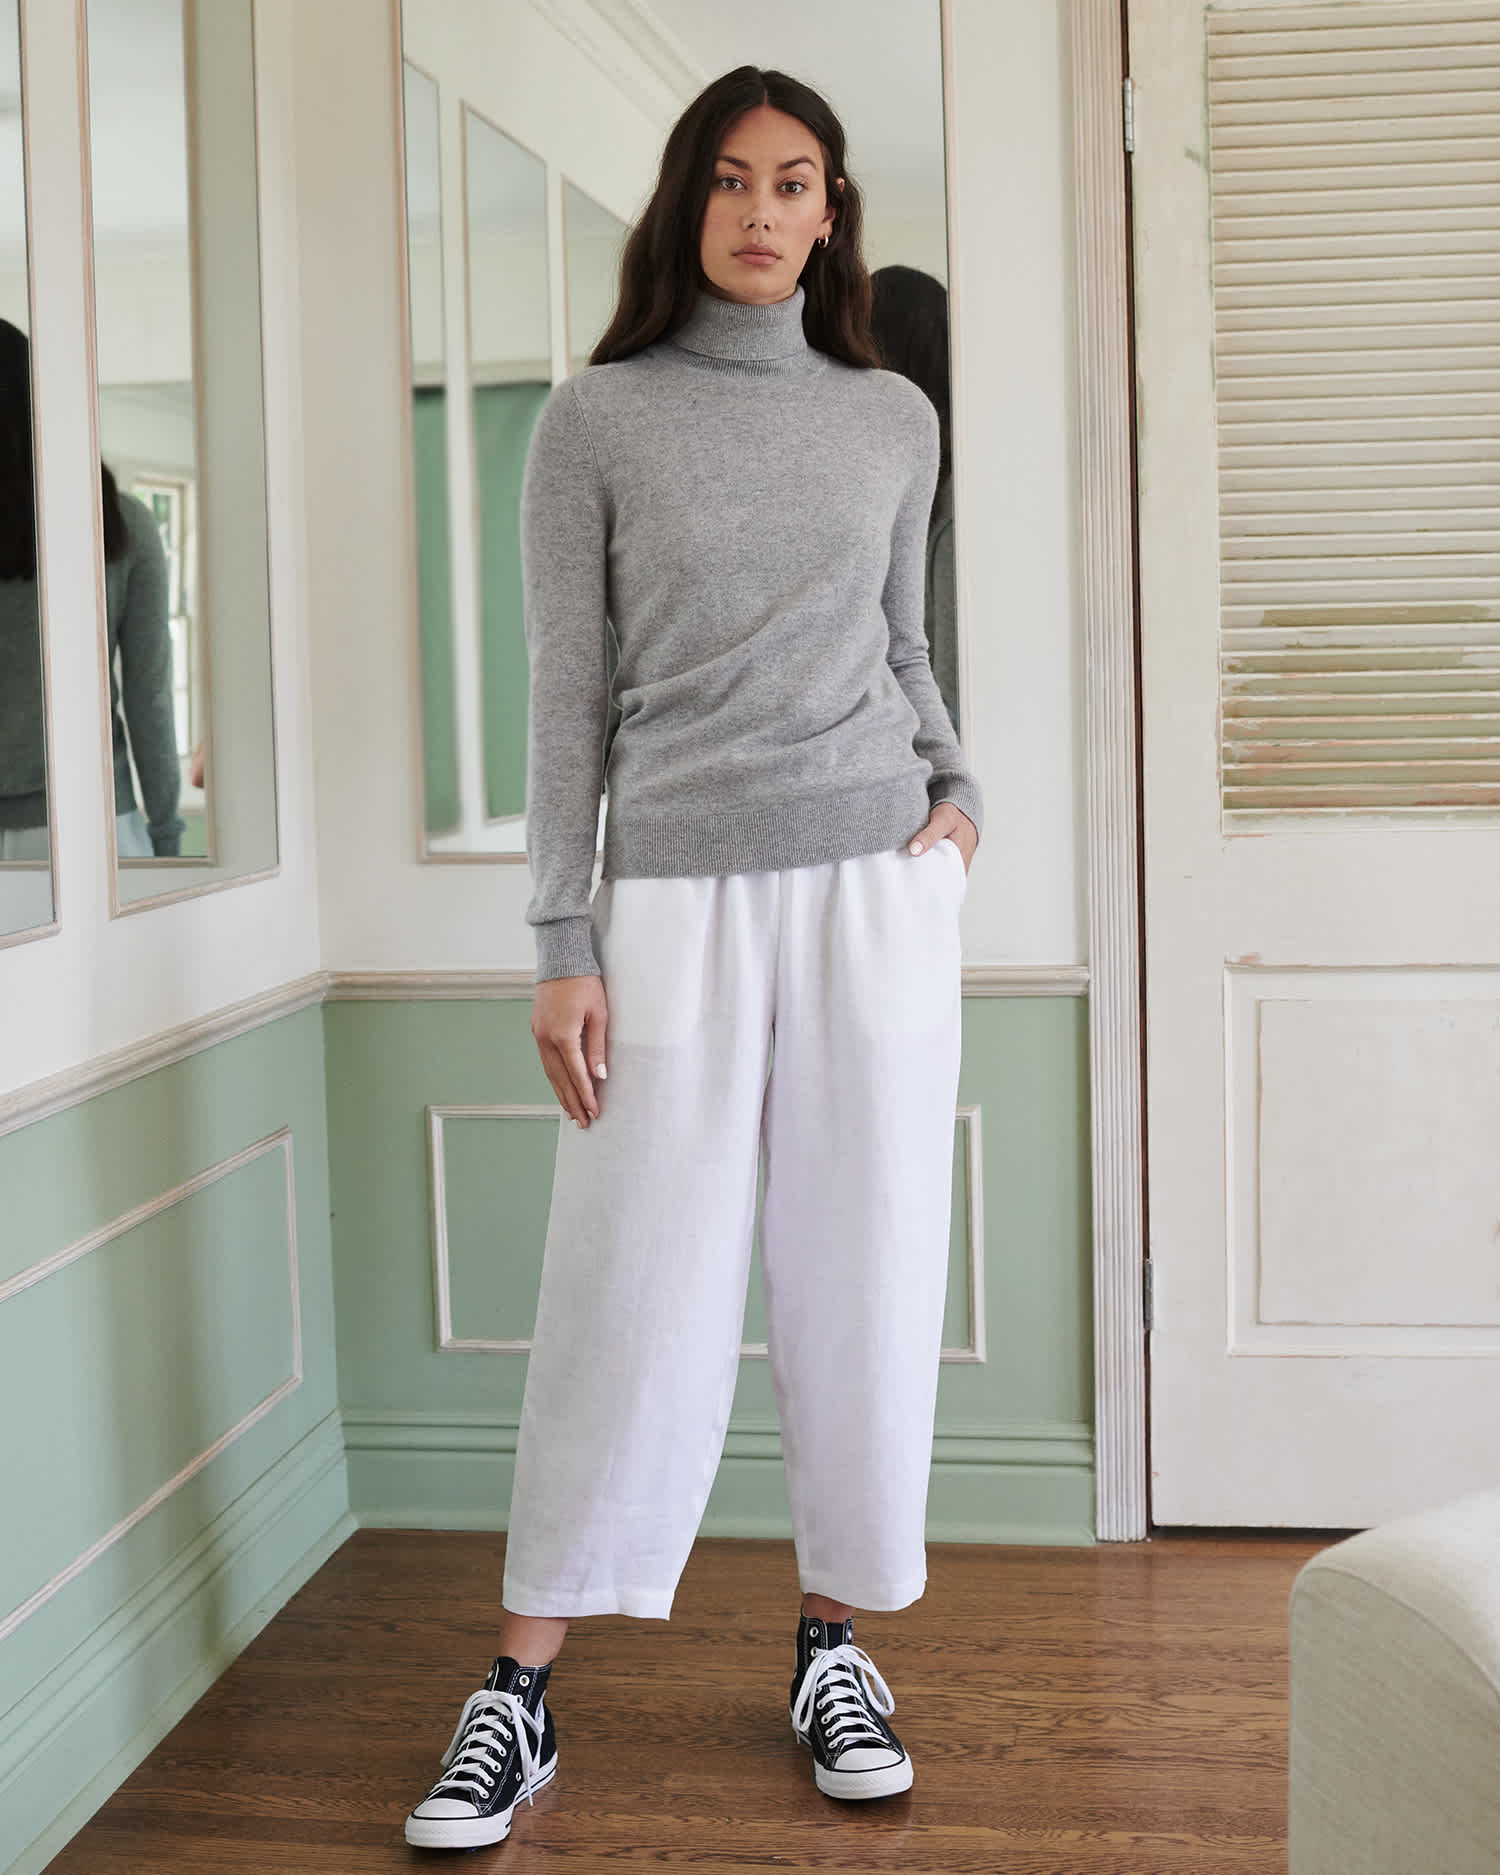 Woman wearing grey cashmere turtleneck sweater standing